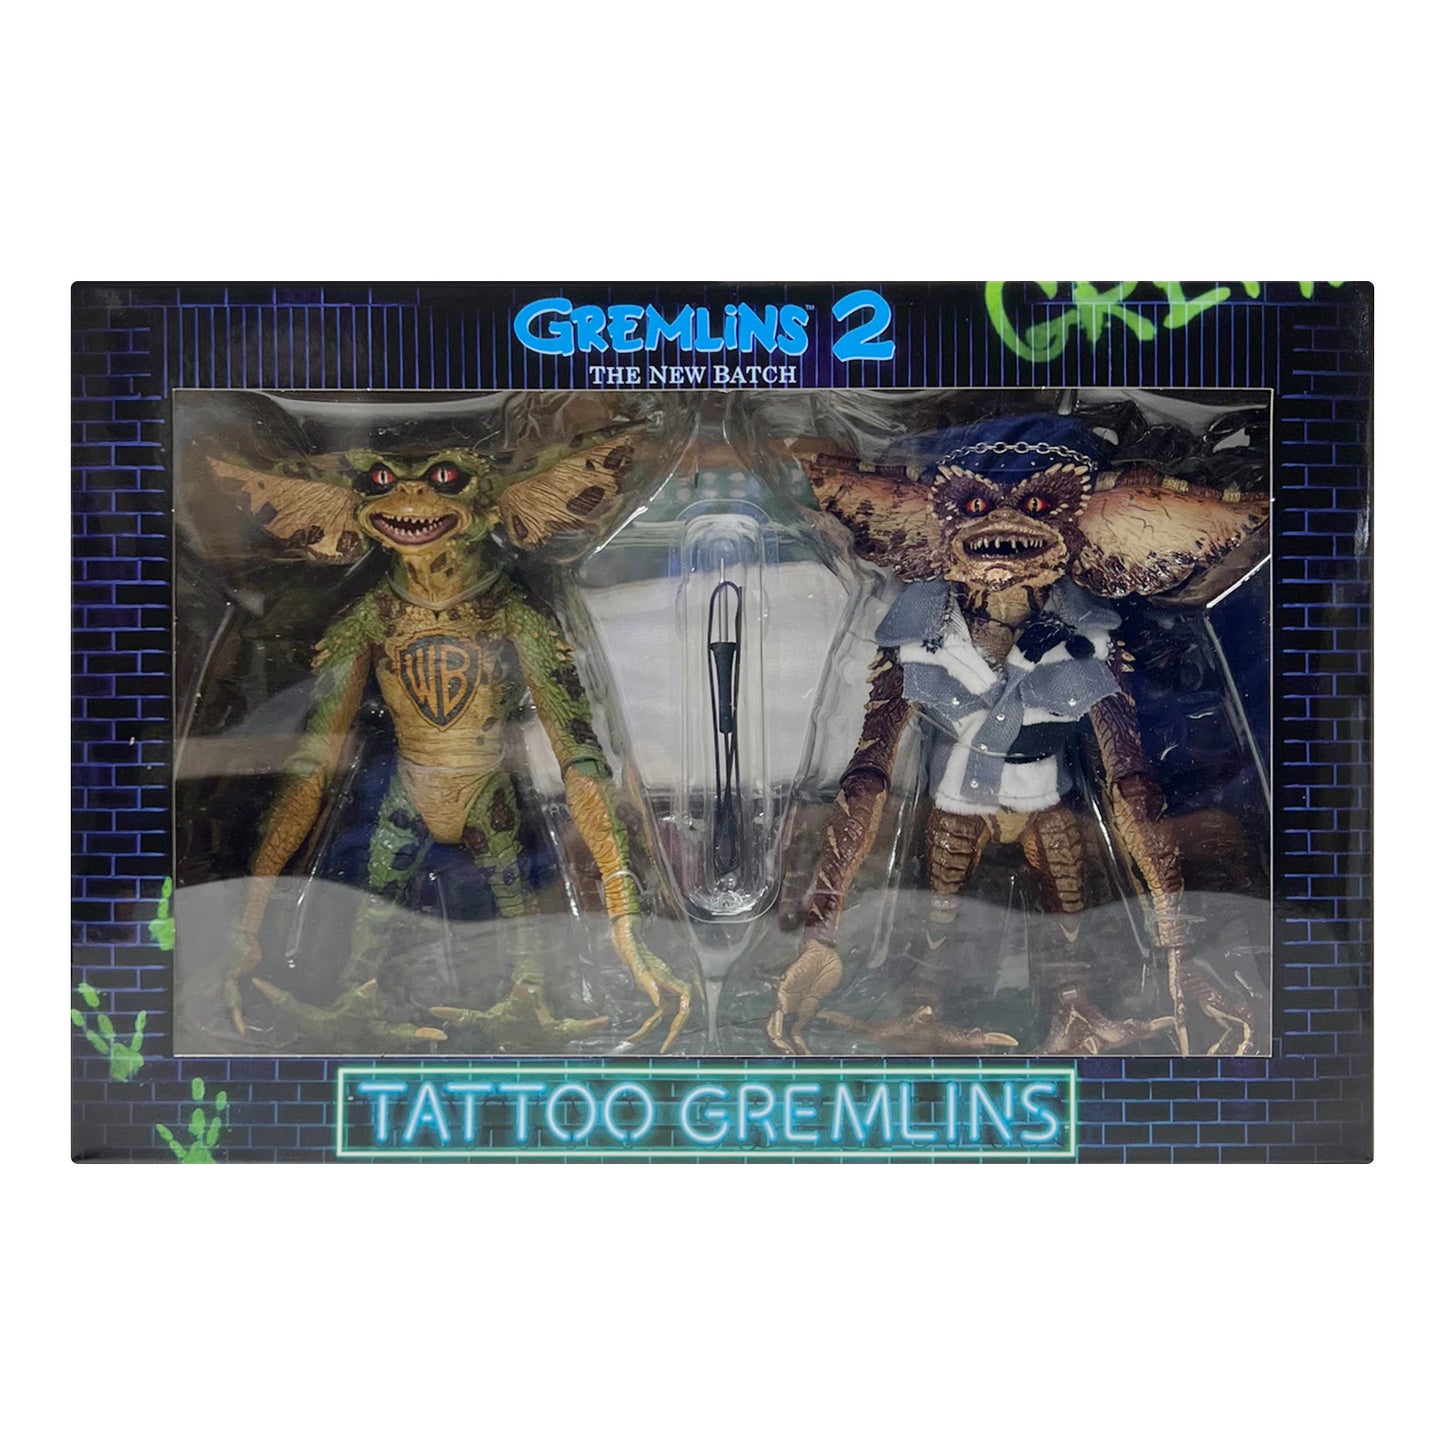 NECA: Gremlins 2 - Tattoo Gremlins 2 Pack 7" Tall Action Figure